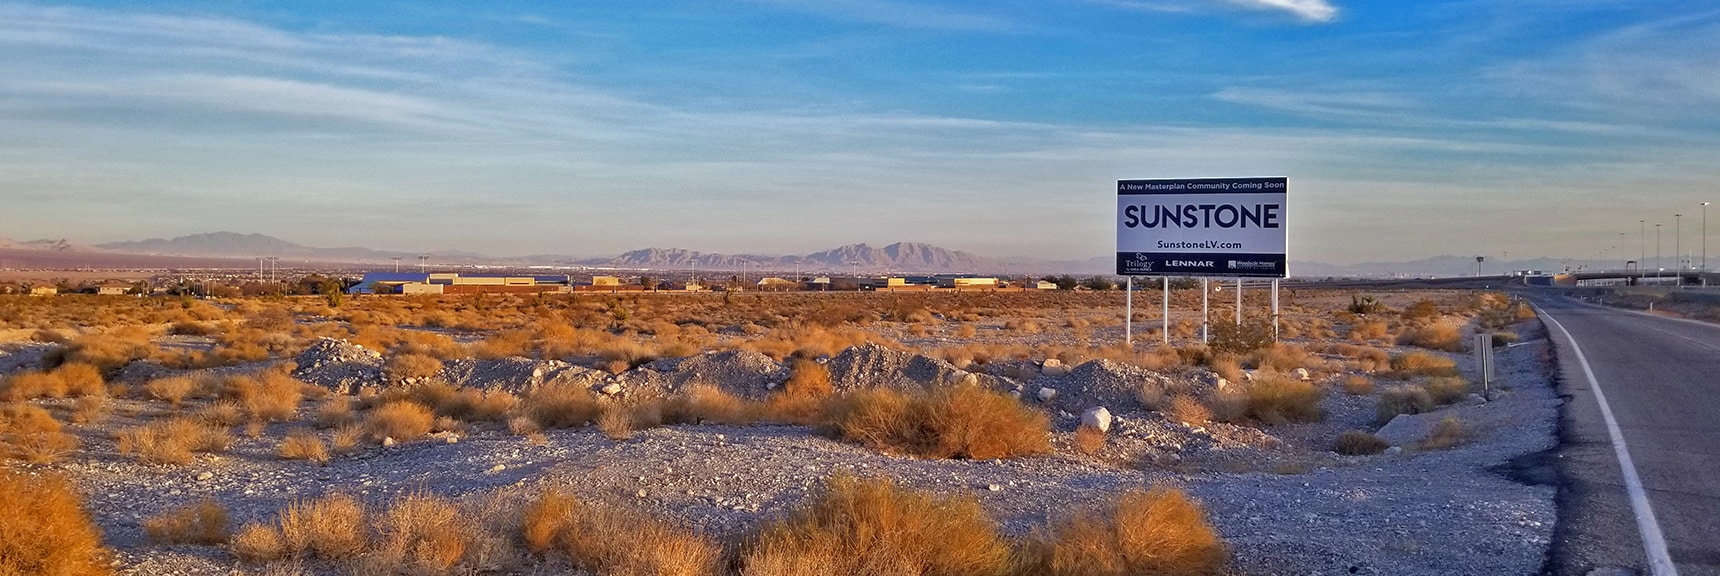 Sunstone Estates Just Before Development | Snapshot of Las Vegas Northern Growth Edge on January 3, 2021